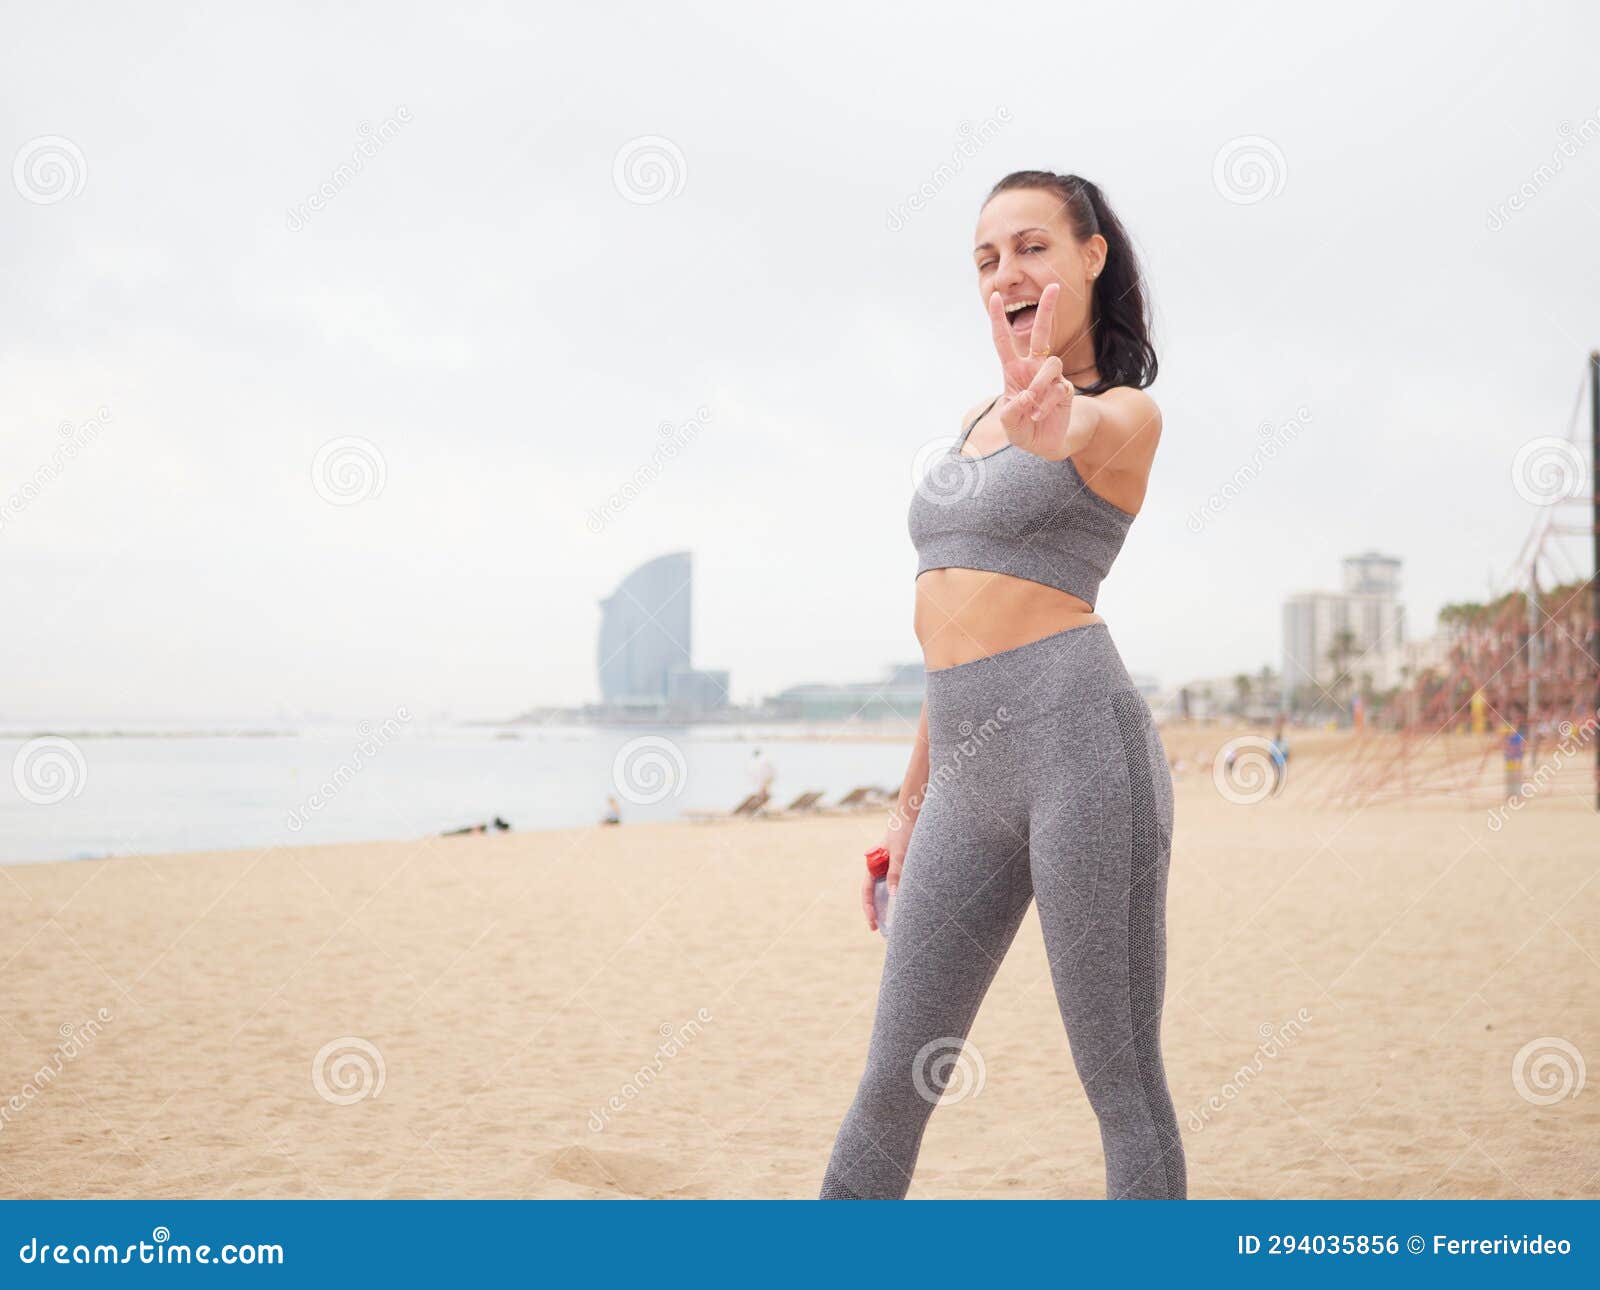 young woman doing stretching at playa de la barceloneta - barcelona spain.